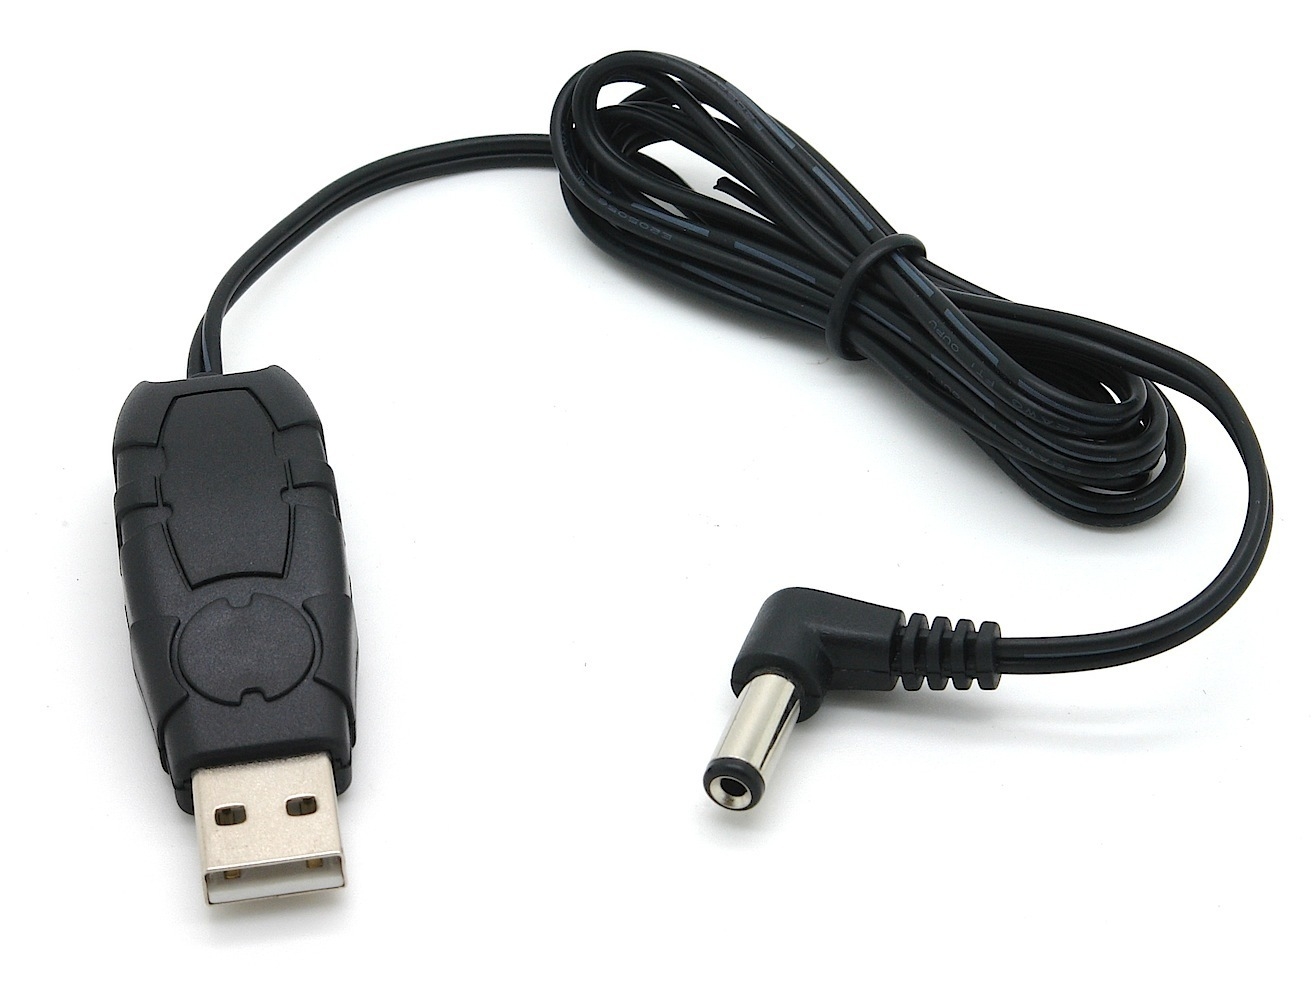 1m) 5V USB DC Ladekabel USB A Stecker auf Hohlstecker